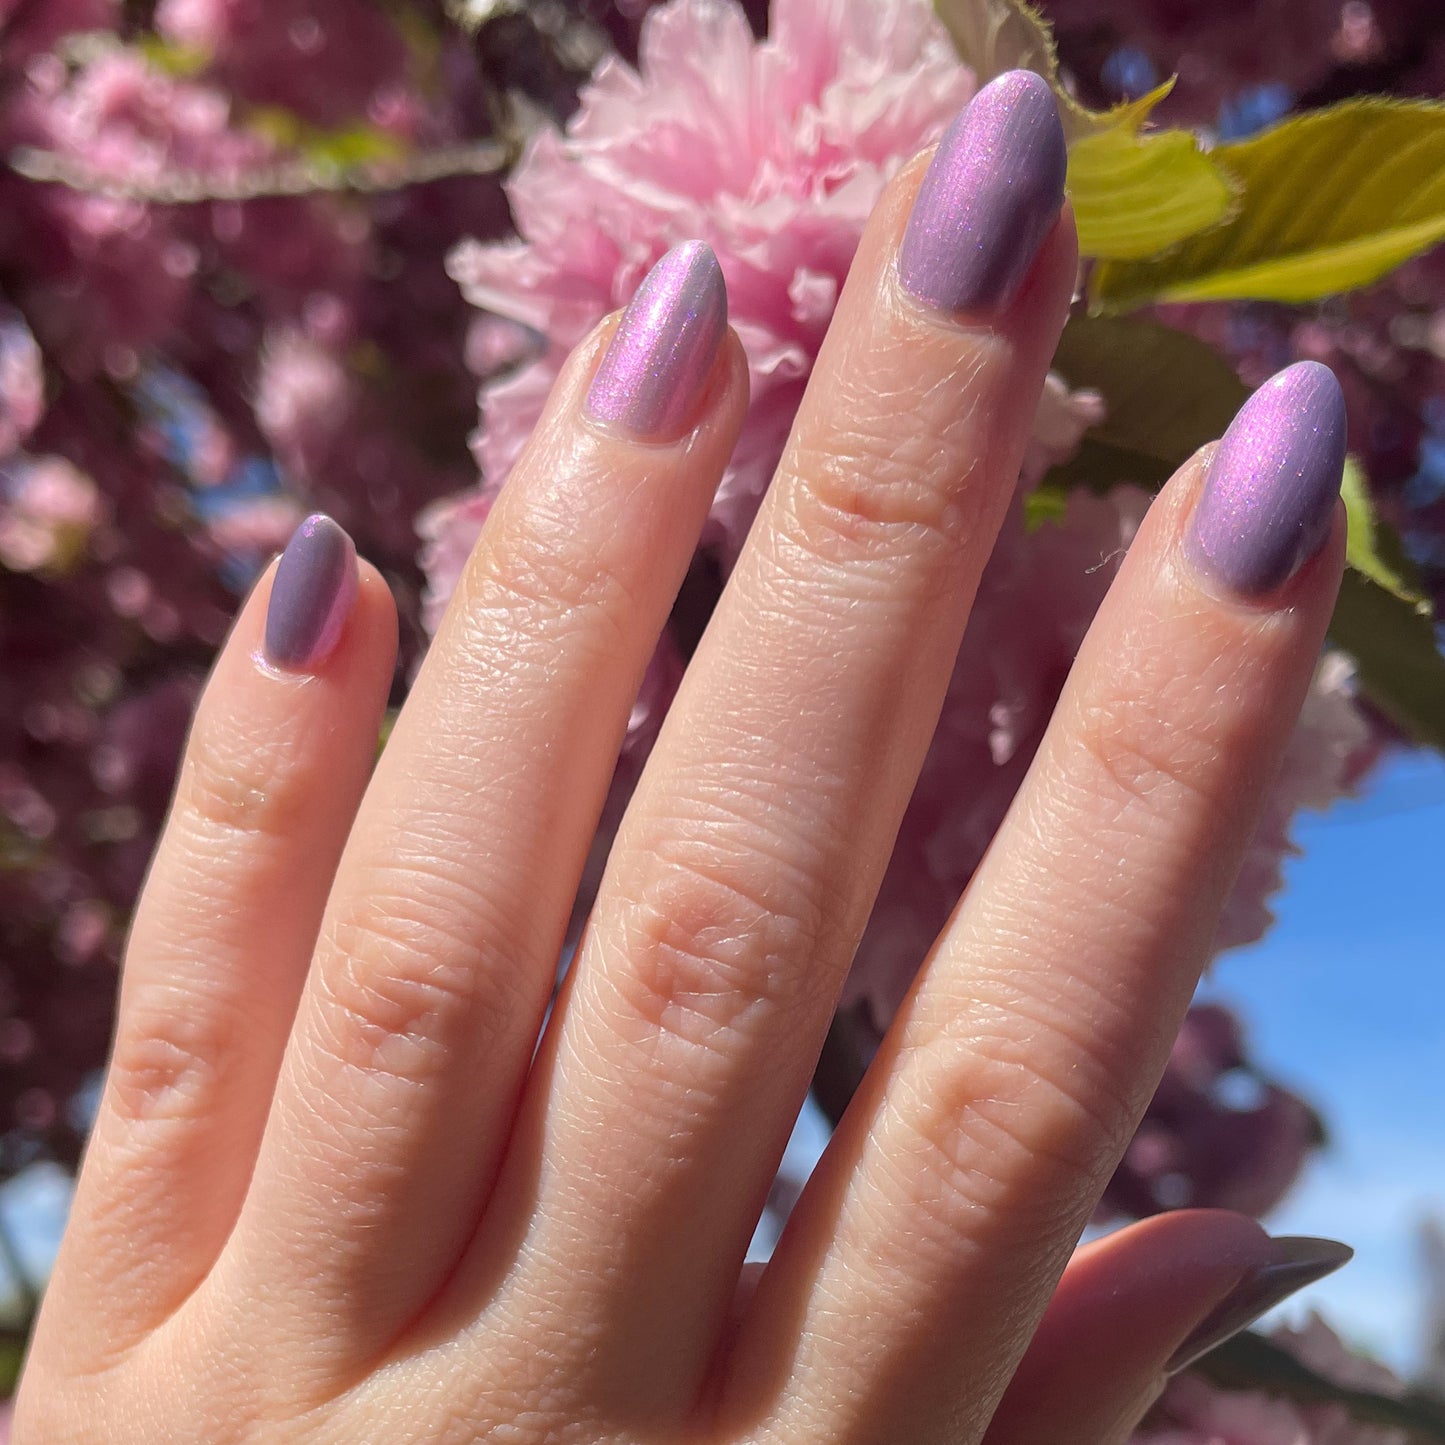 Fields of Lilac